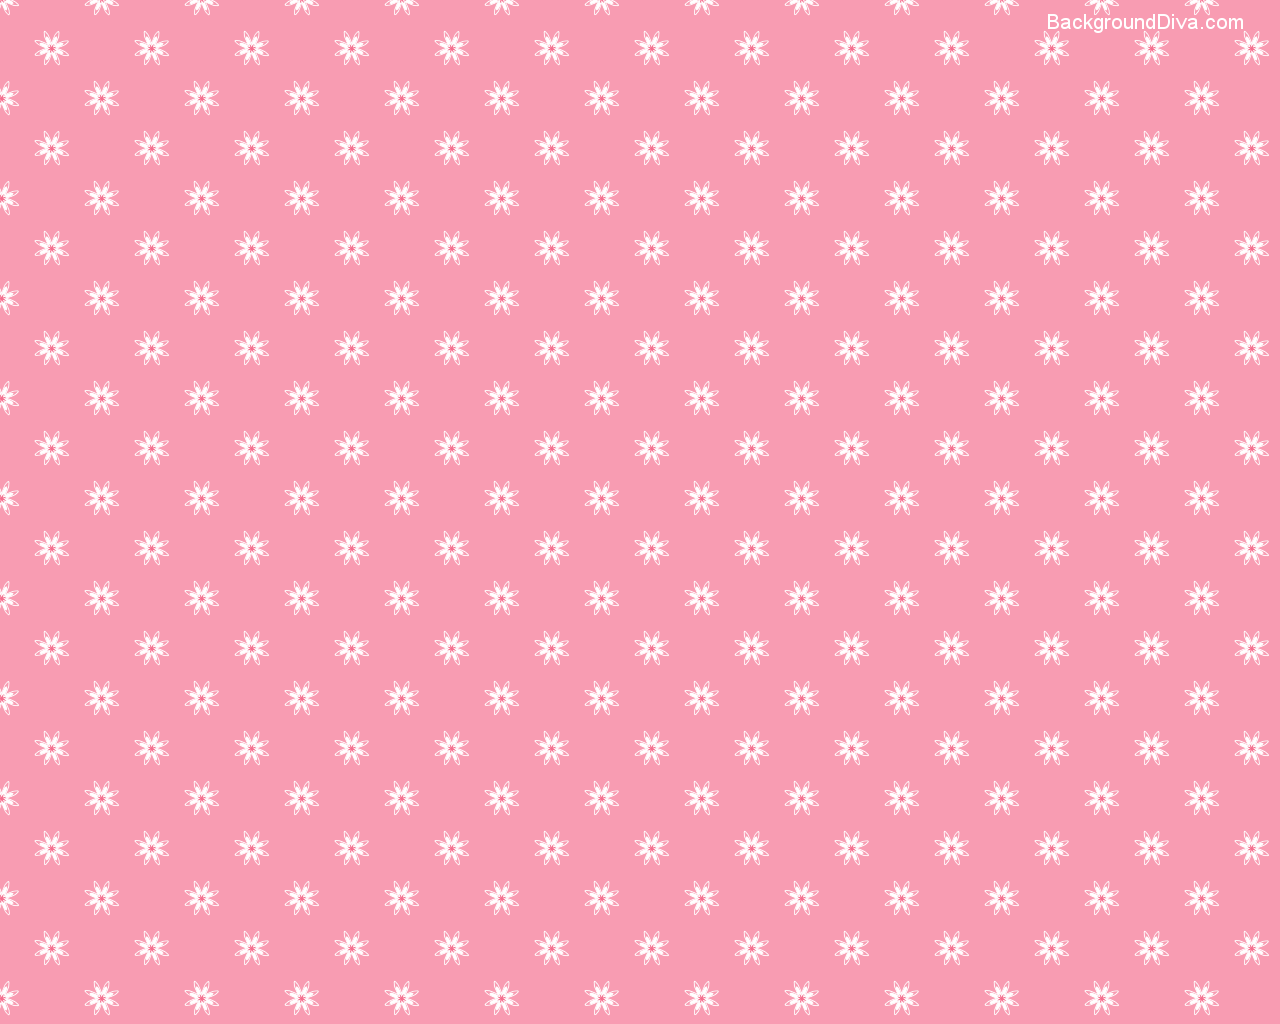 Cute Pink Wallpapers - Wallpaper Cave